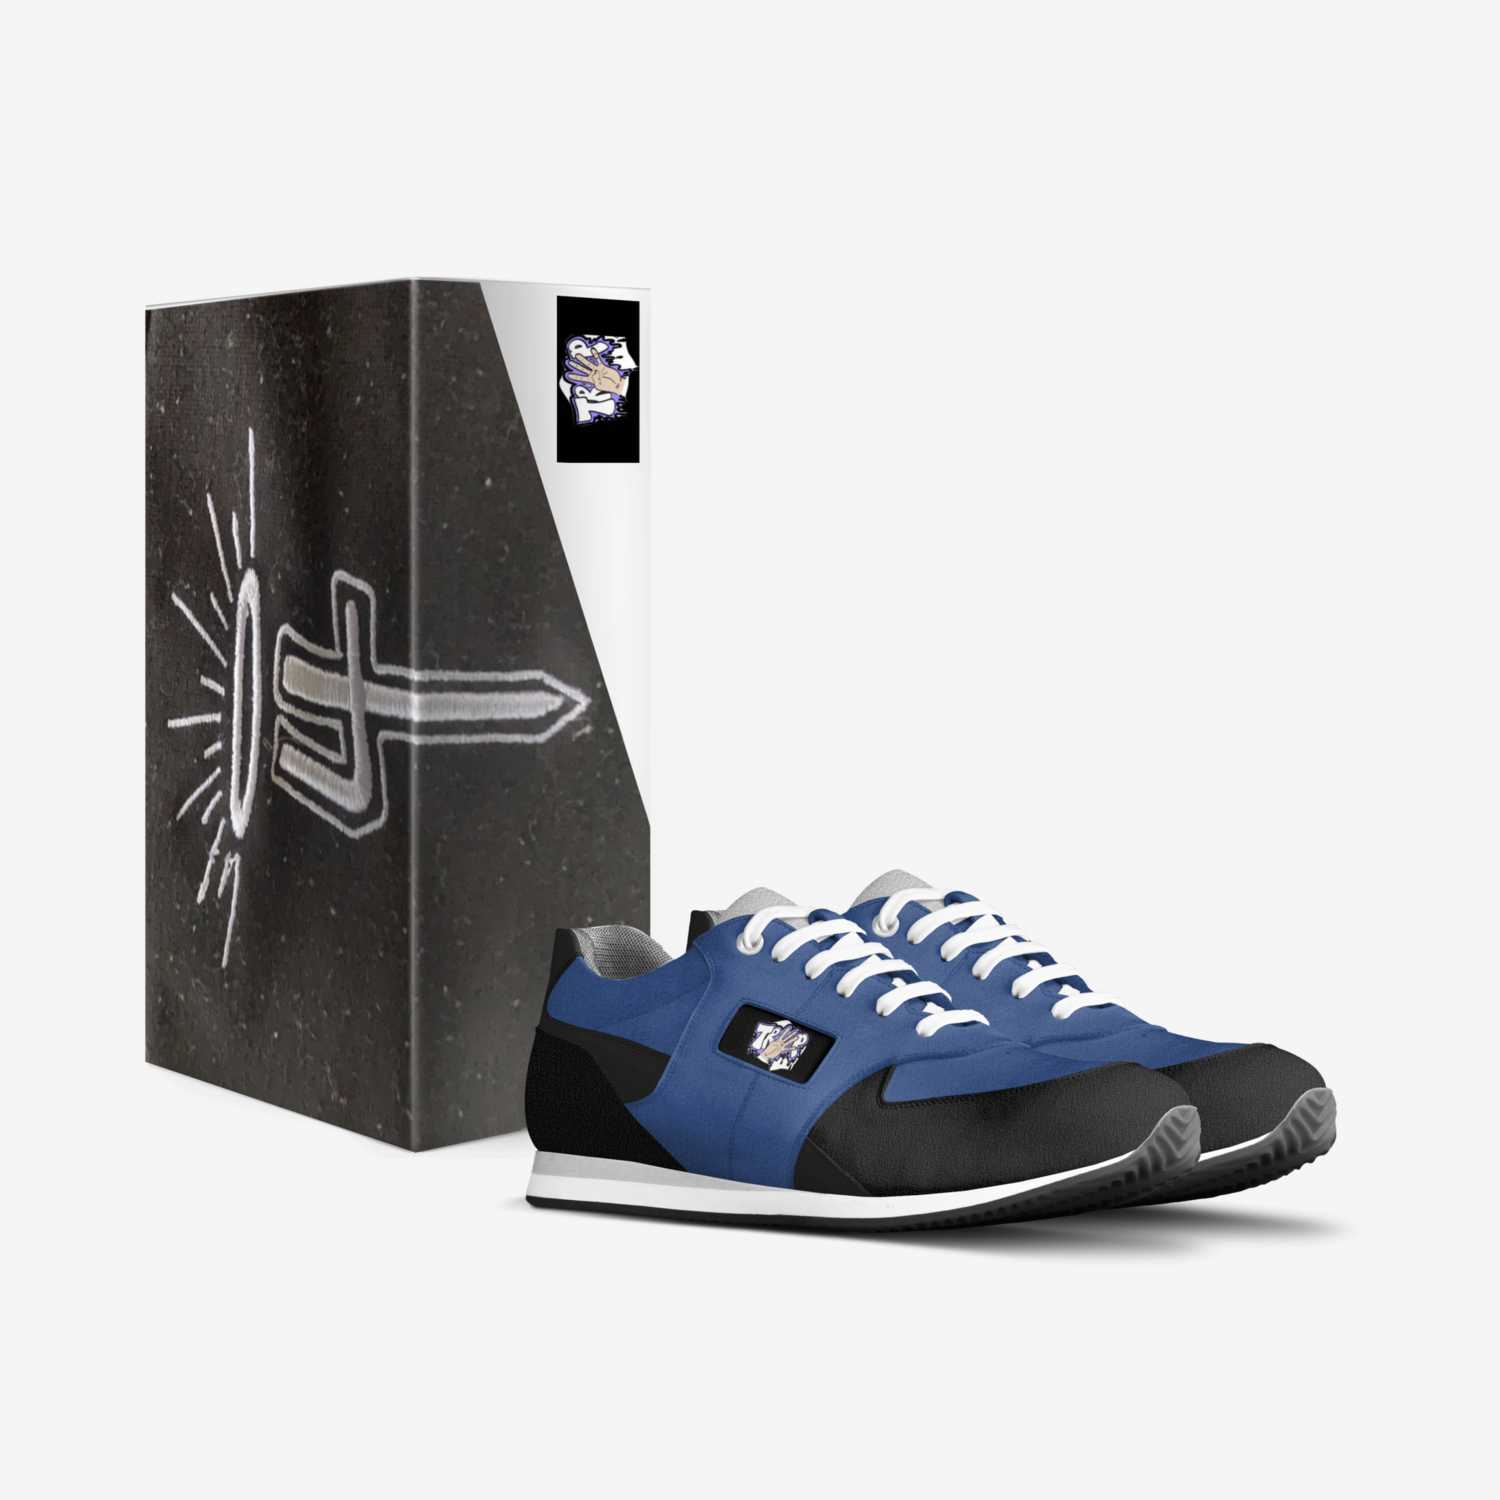 Tr4p G ''El azul'' custom made in Italy shoes by Jamez Netan El | Box view